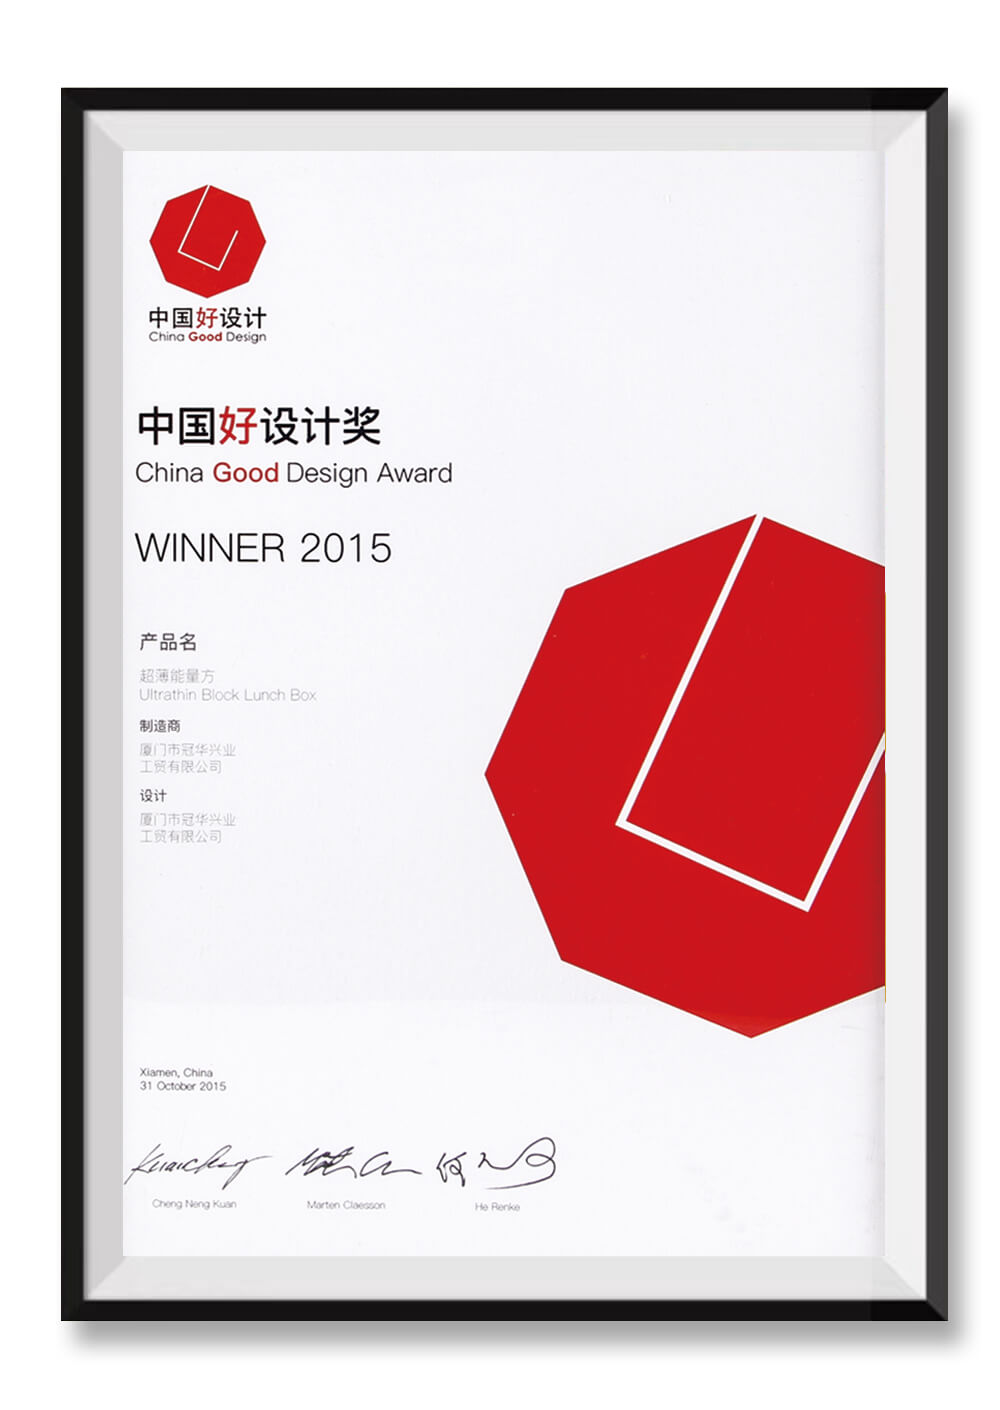 China good design award winner Certificate